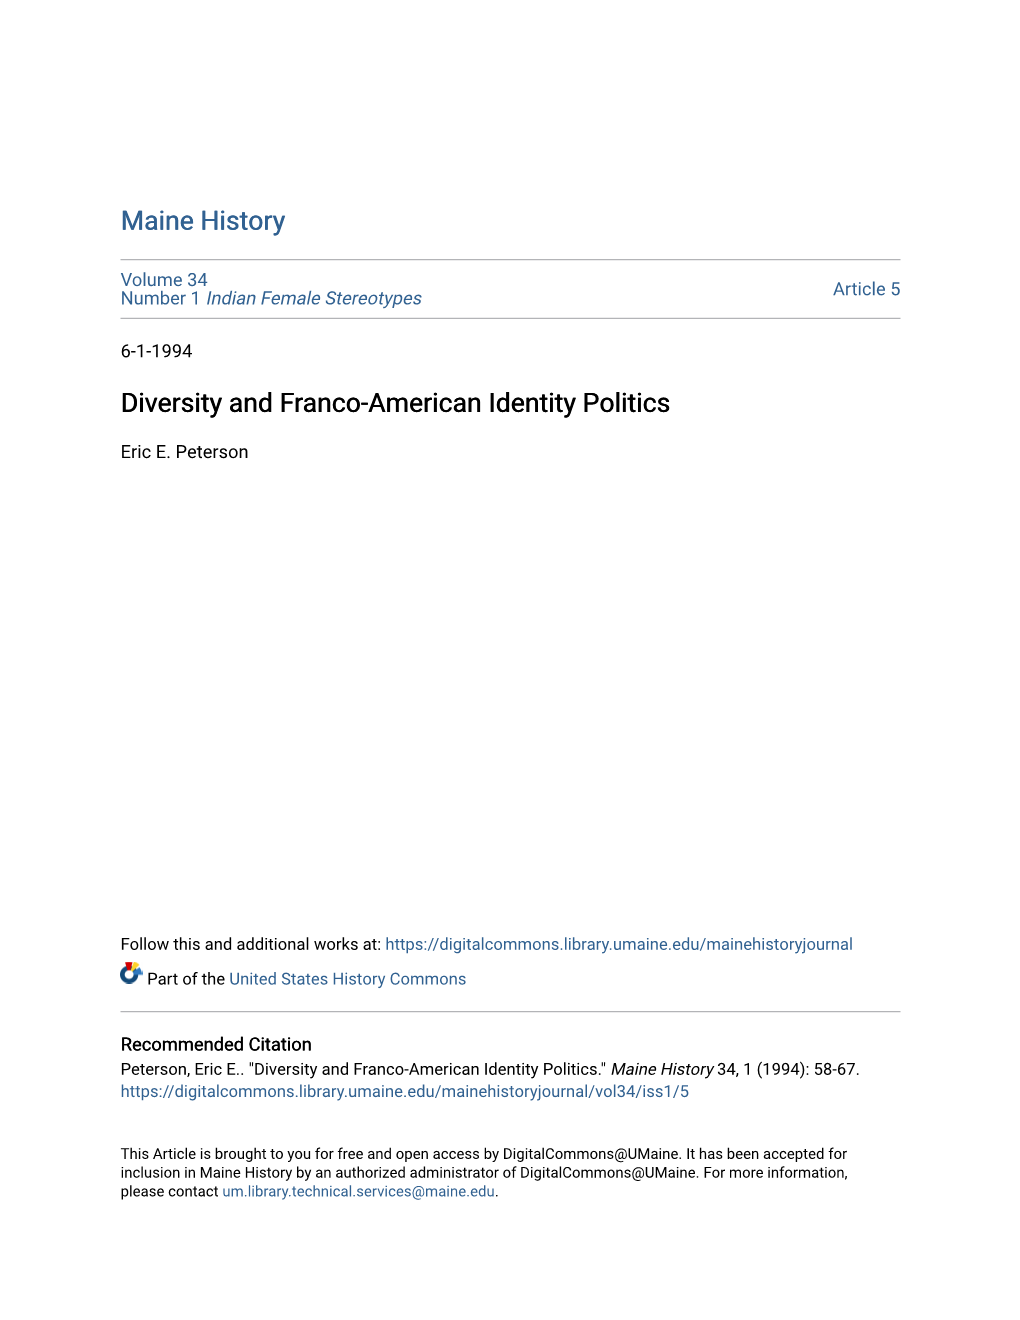 Diversity and Franco-American Identity Politics